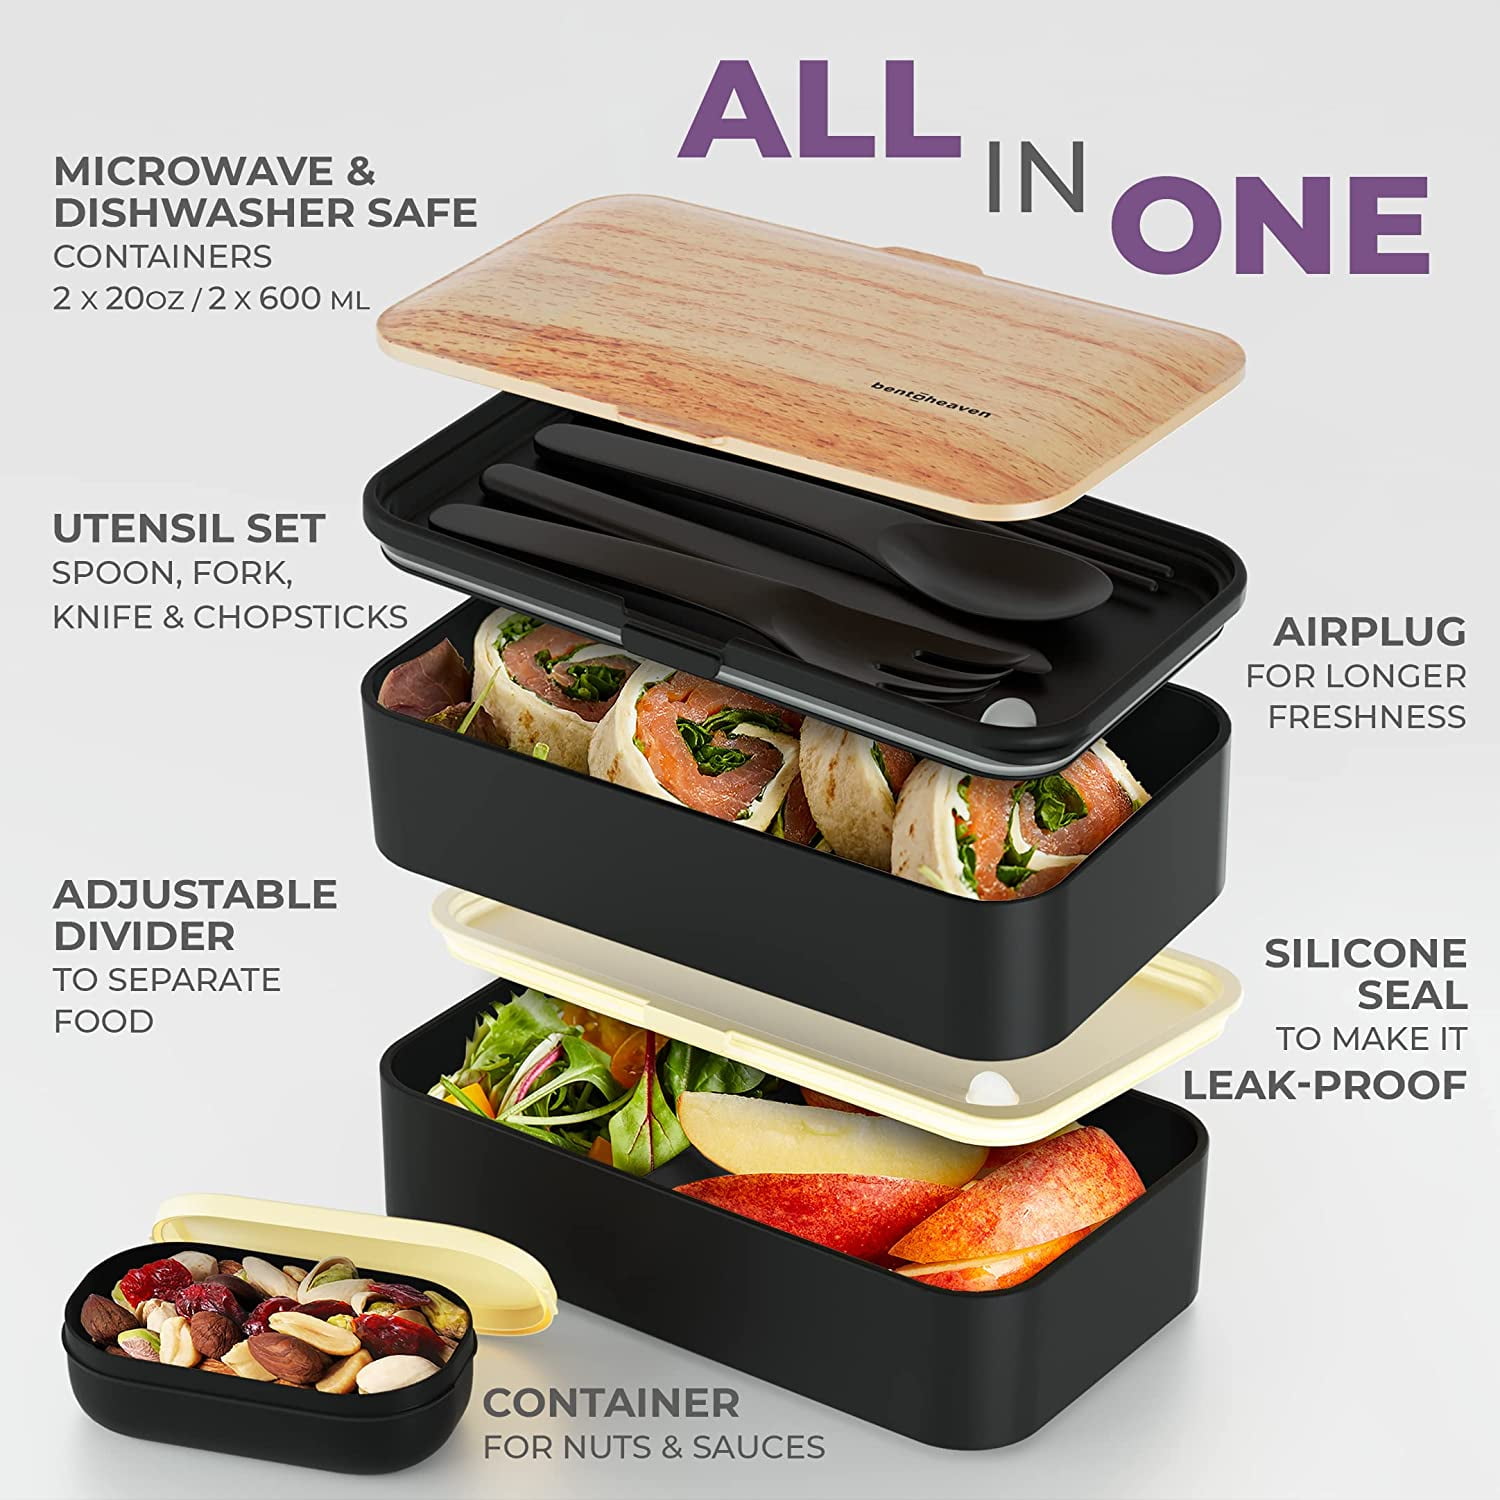 Premium Bento Lunch Box (Large 68 Oz Capacity), 2022 Exclusive, 70% Bigger, In